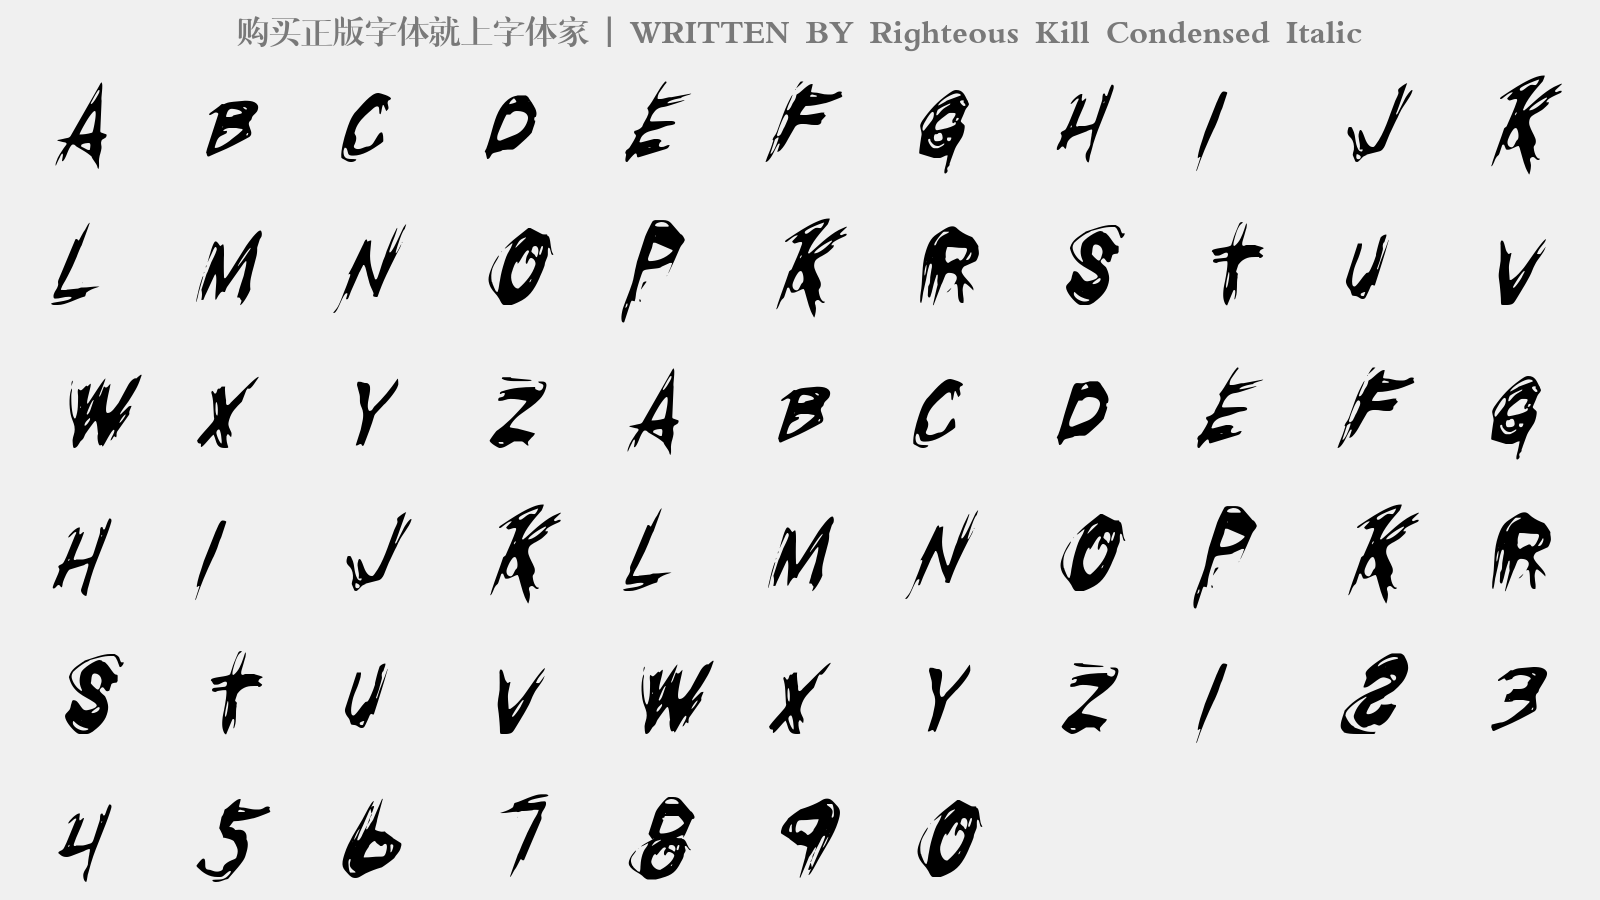 Righteous Kill Condensed Italic - 大写字母/小写字母/数字